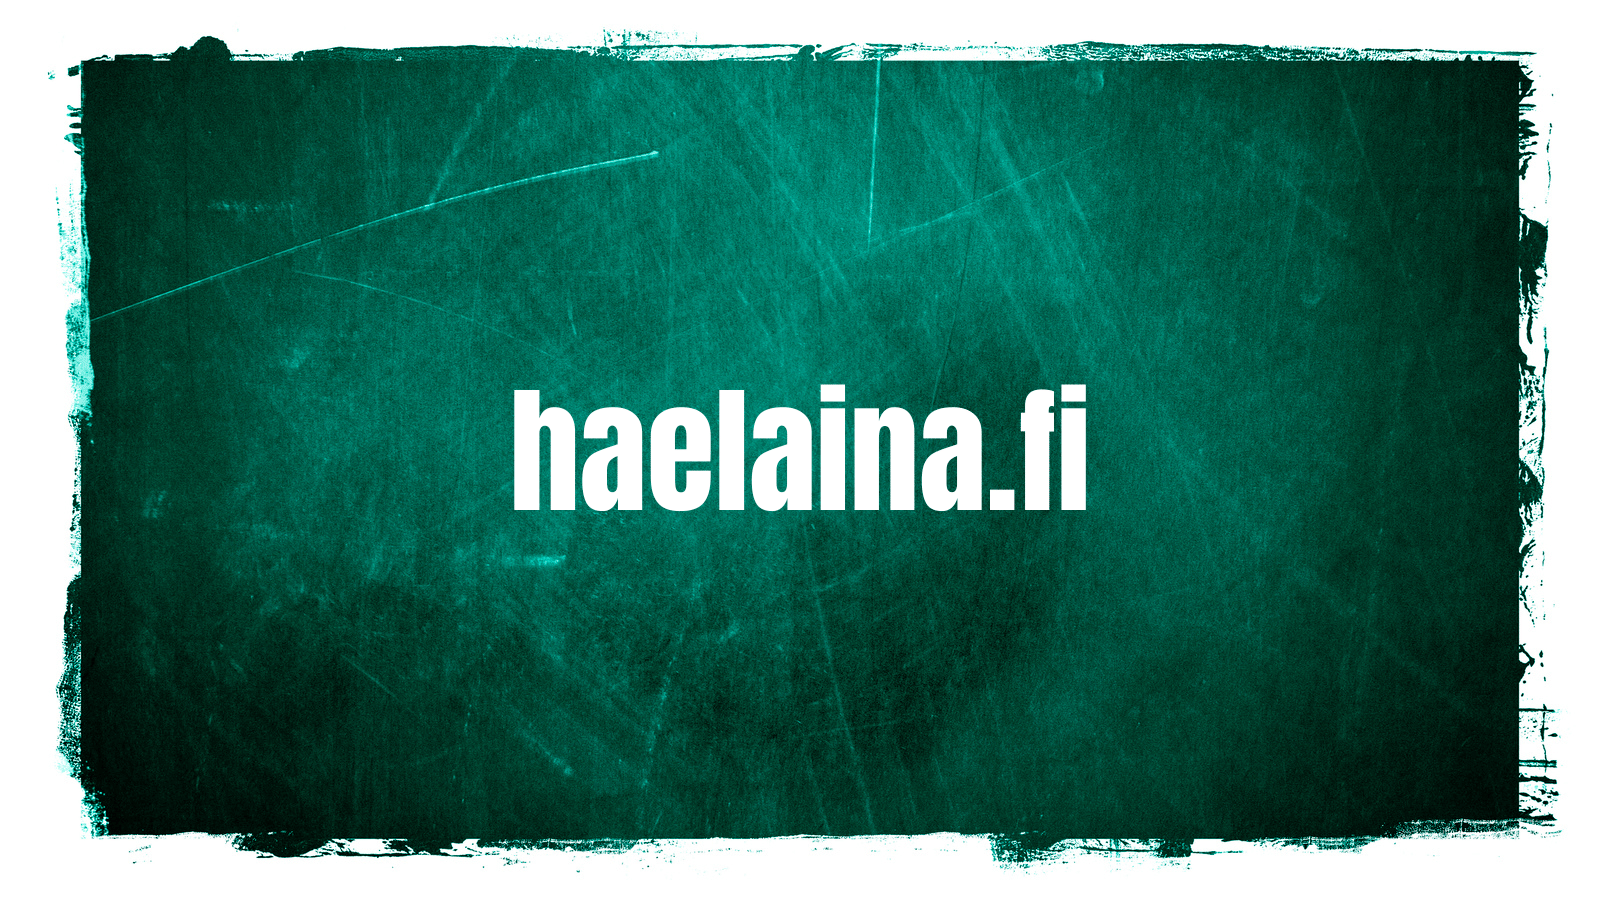 Haelaina.fi Kokemuksia